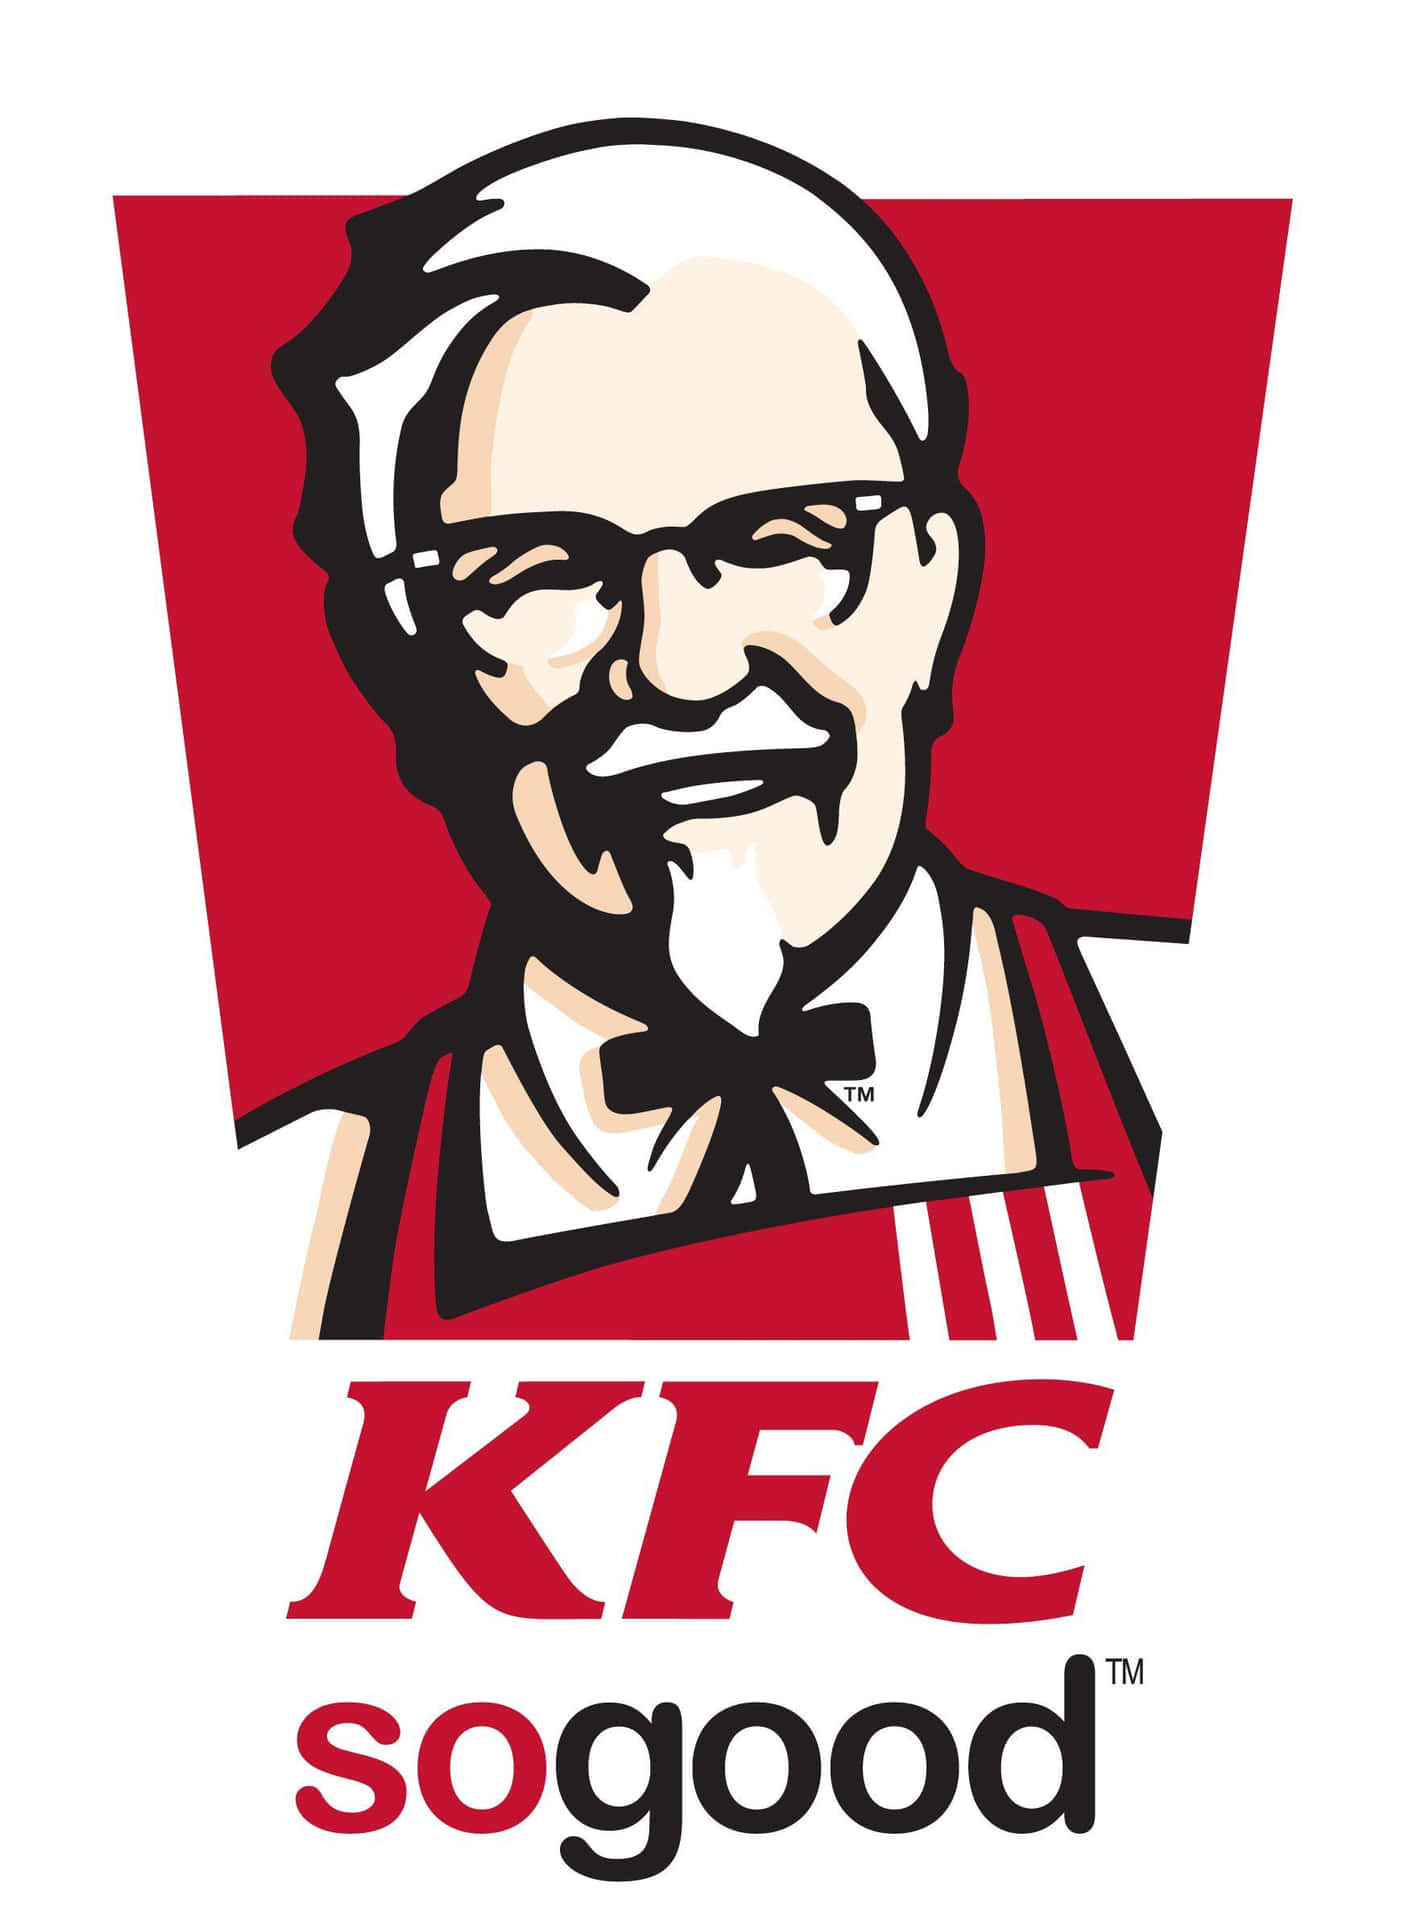 Enjoy Delicious KFC meals